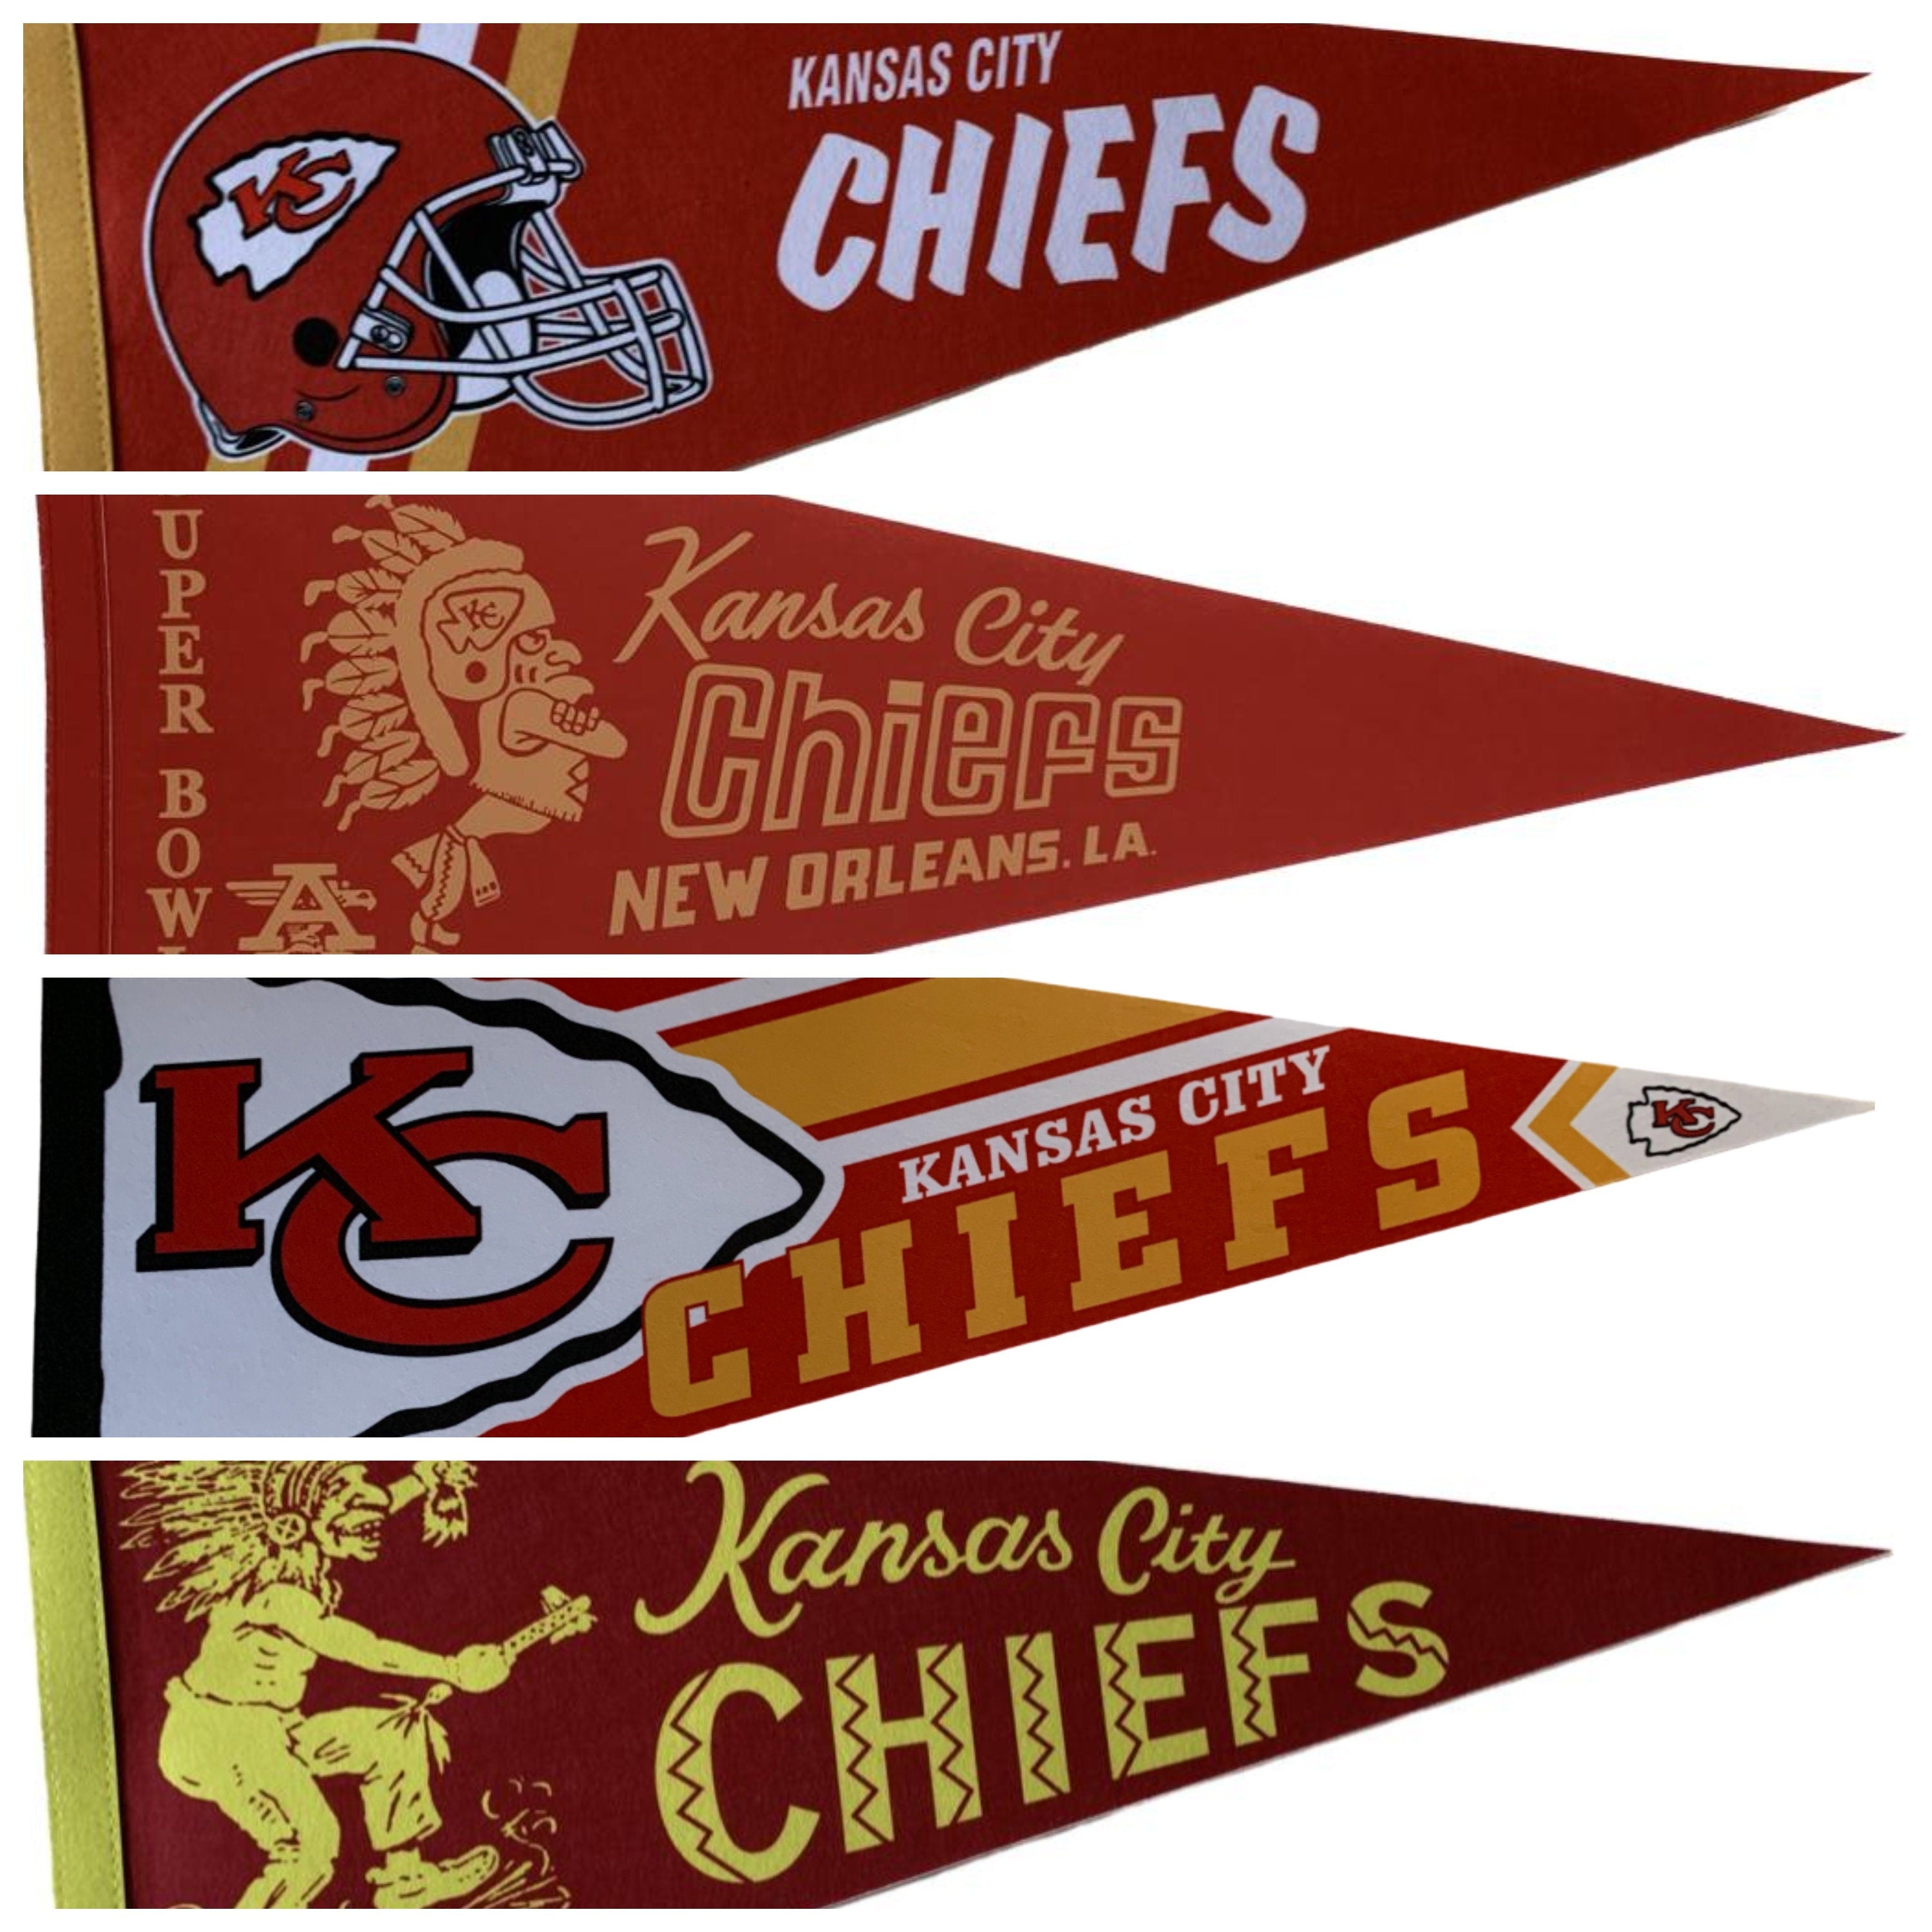 Kansas City Chiefs american football NFL gridiron pennants vaantje vlaggetje vlag fanion pennant flag fahne drapeaux vintage and new finds - Design1